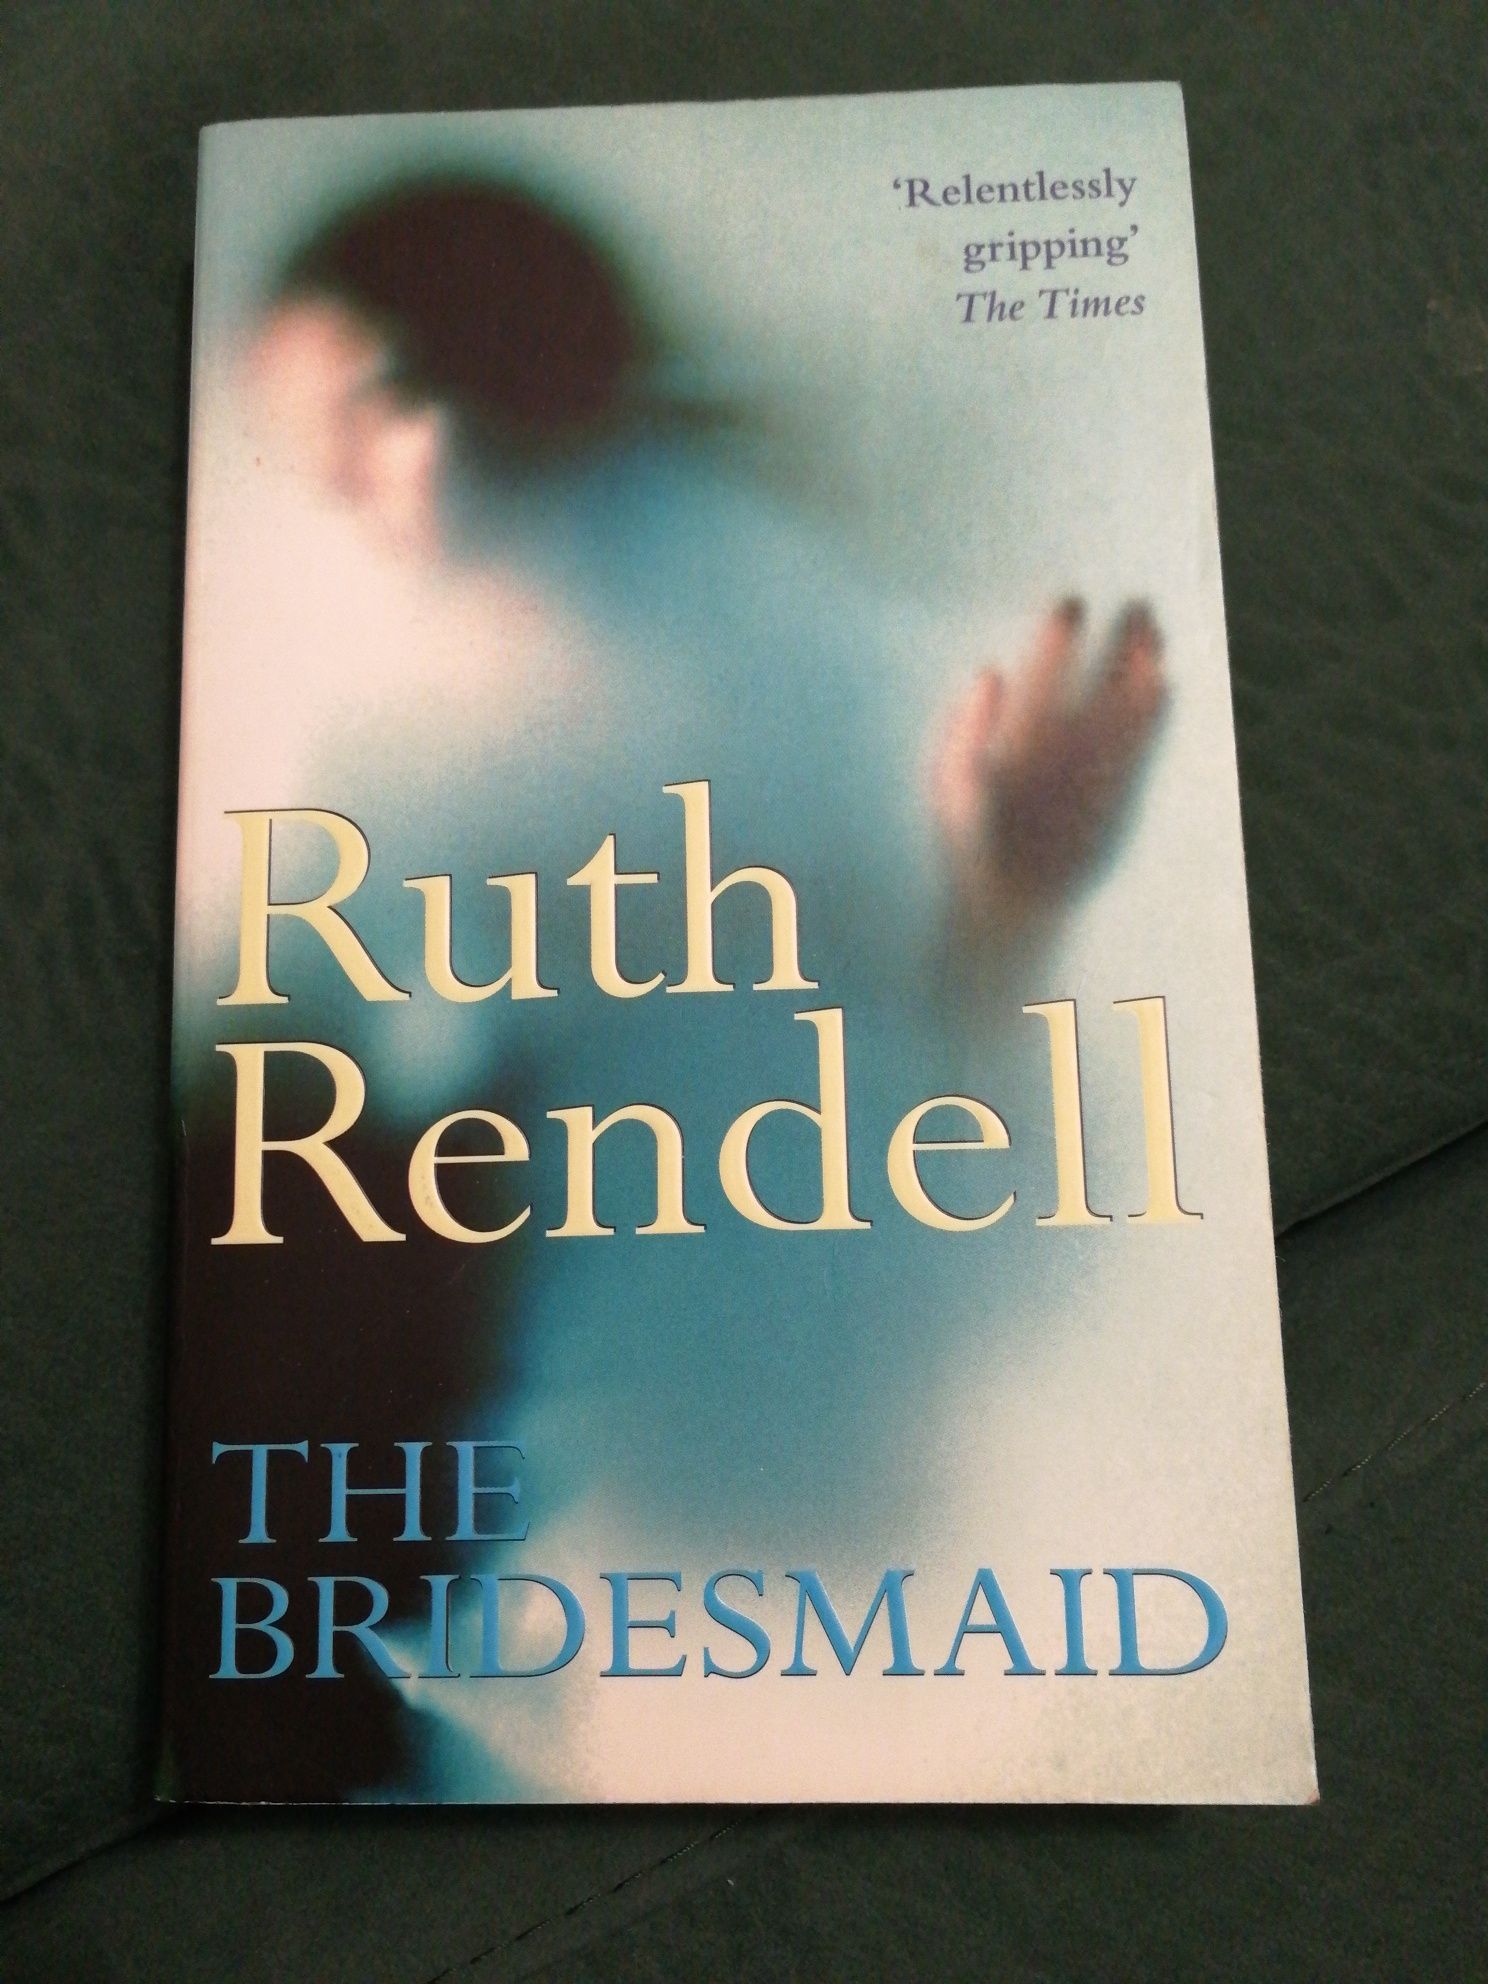 Livro "The Bridesmaid" de Ruth Rendell